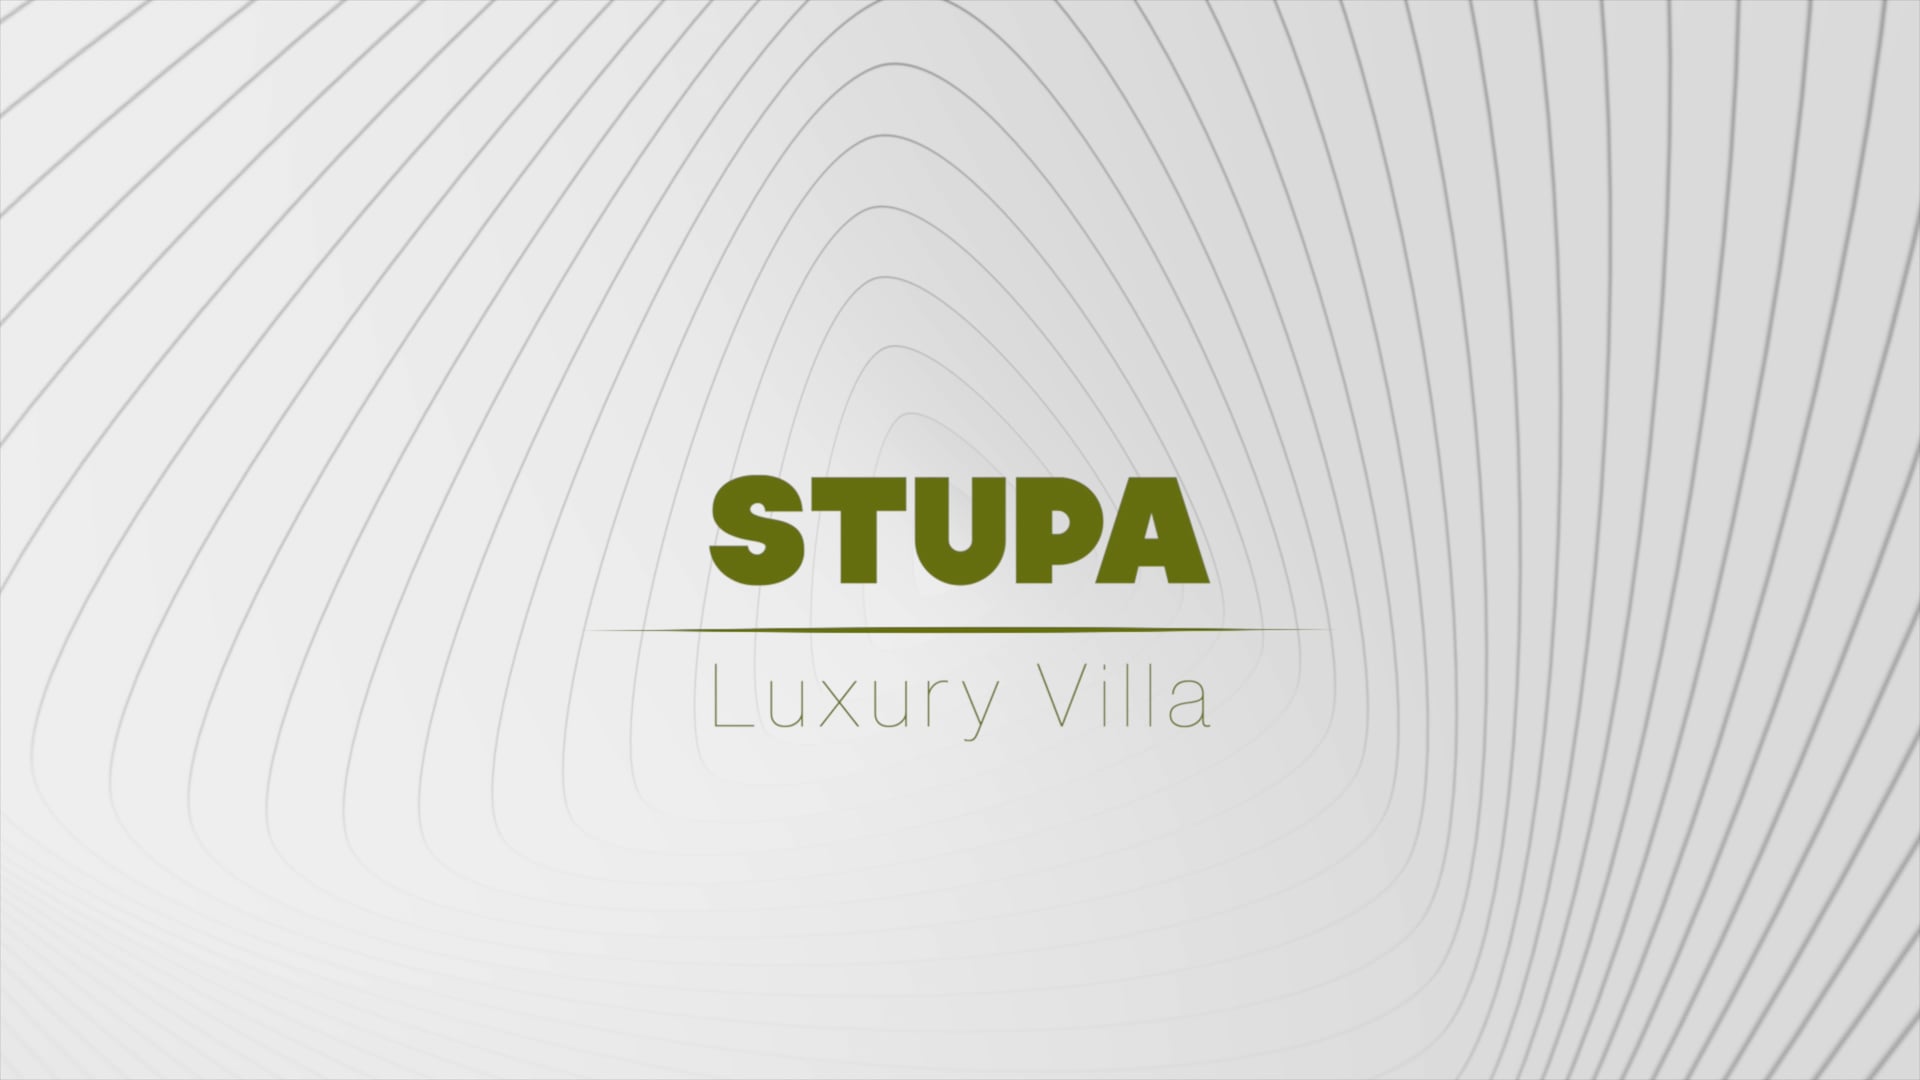 Luxury Holiday Rental Property I Stupa I FPV Micro-Drone Video Tour Experience